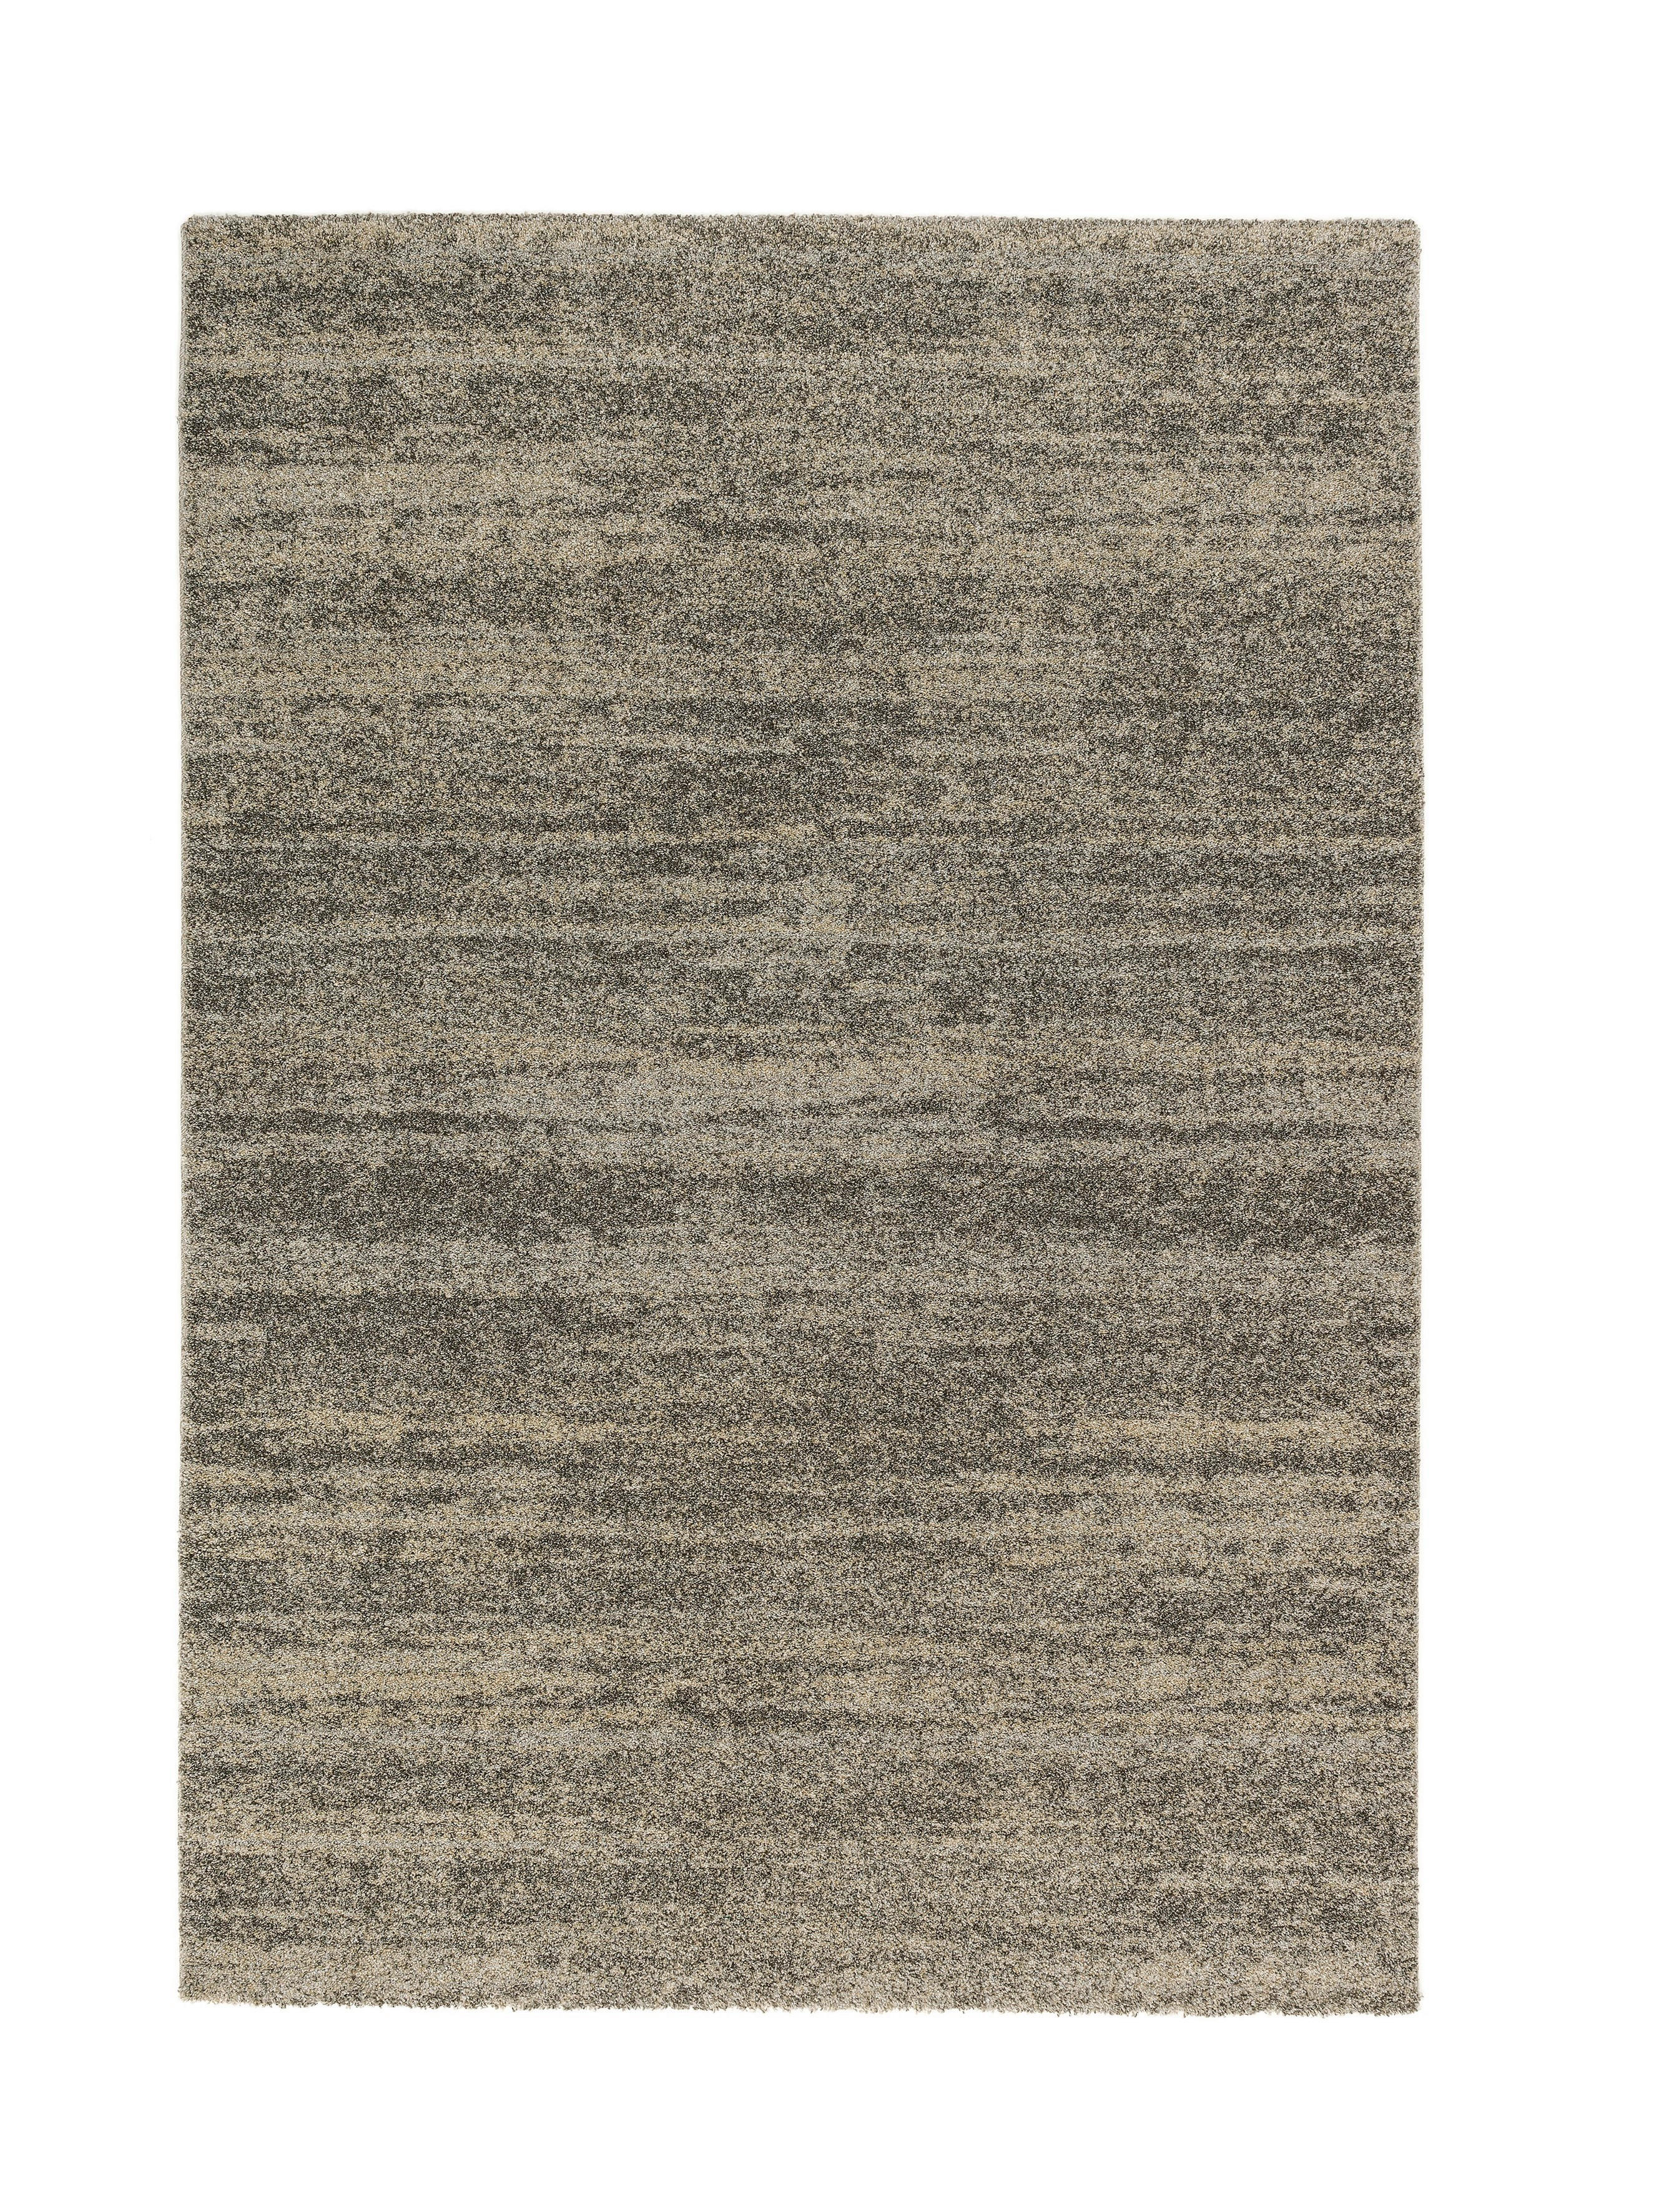 HOCHFLORTEPPICH 200/290 cm  - Grau, Basics, Textil (200/290cm) - Novel